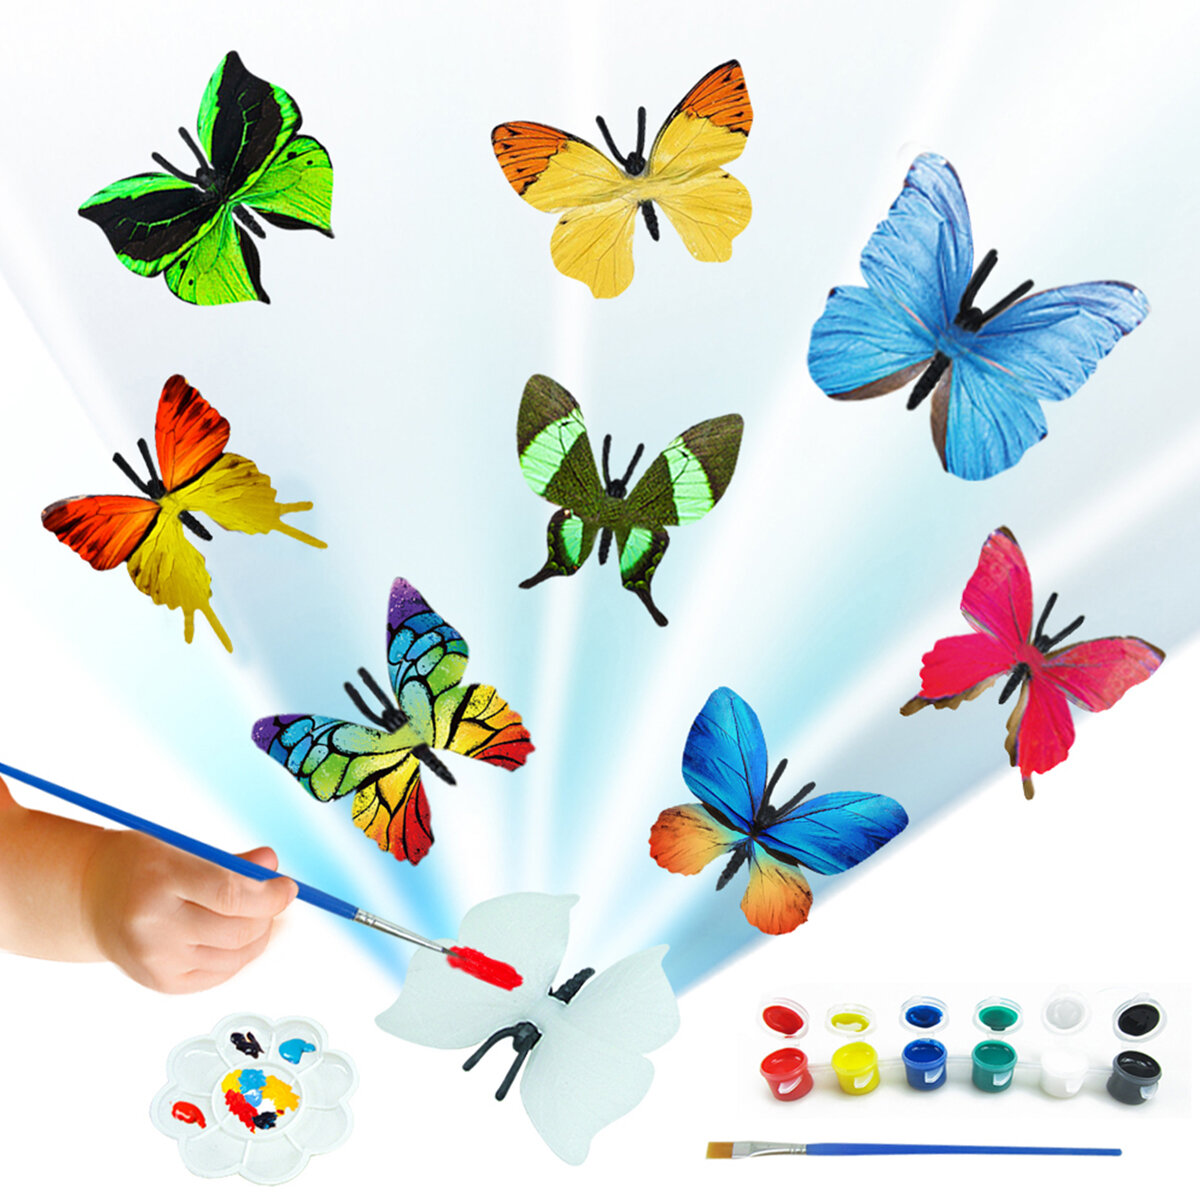 37pcs/set DIY Painting Butterflies Hand-painted Paint Art Crafts Graffiti Pigment Set Kids Children Educational Toys, Banggood  - buy with discount